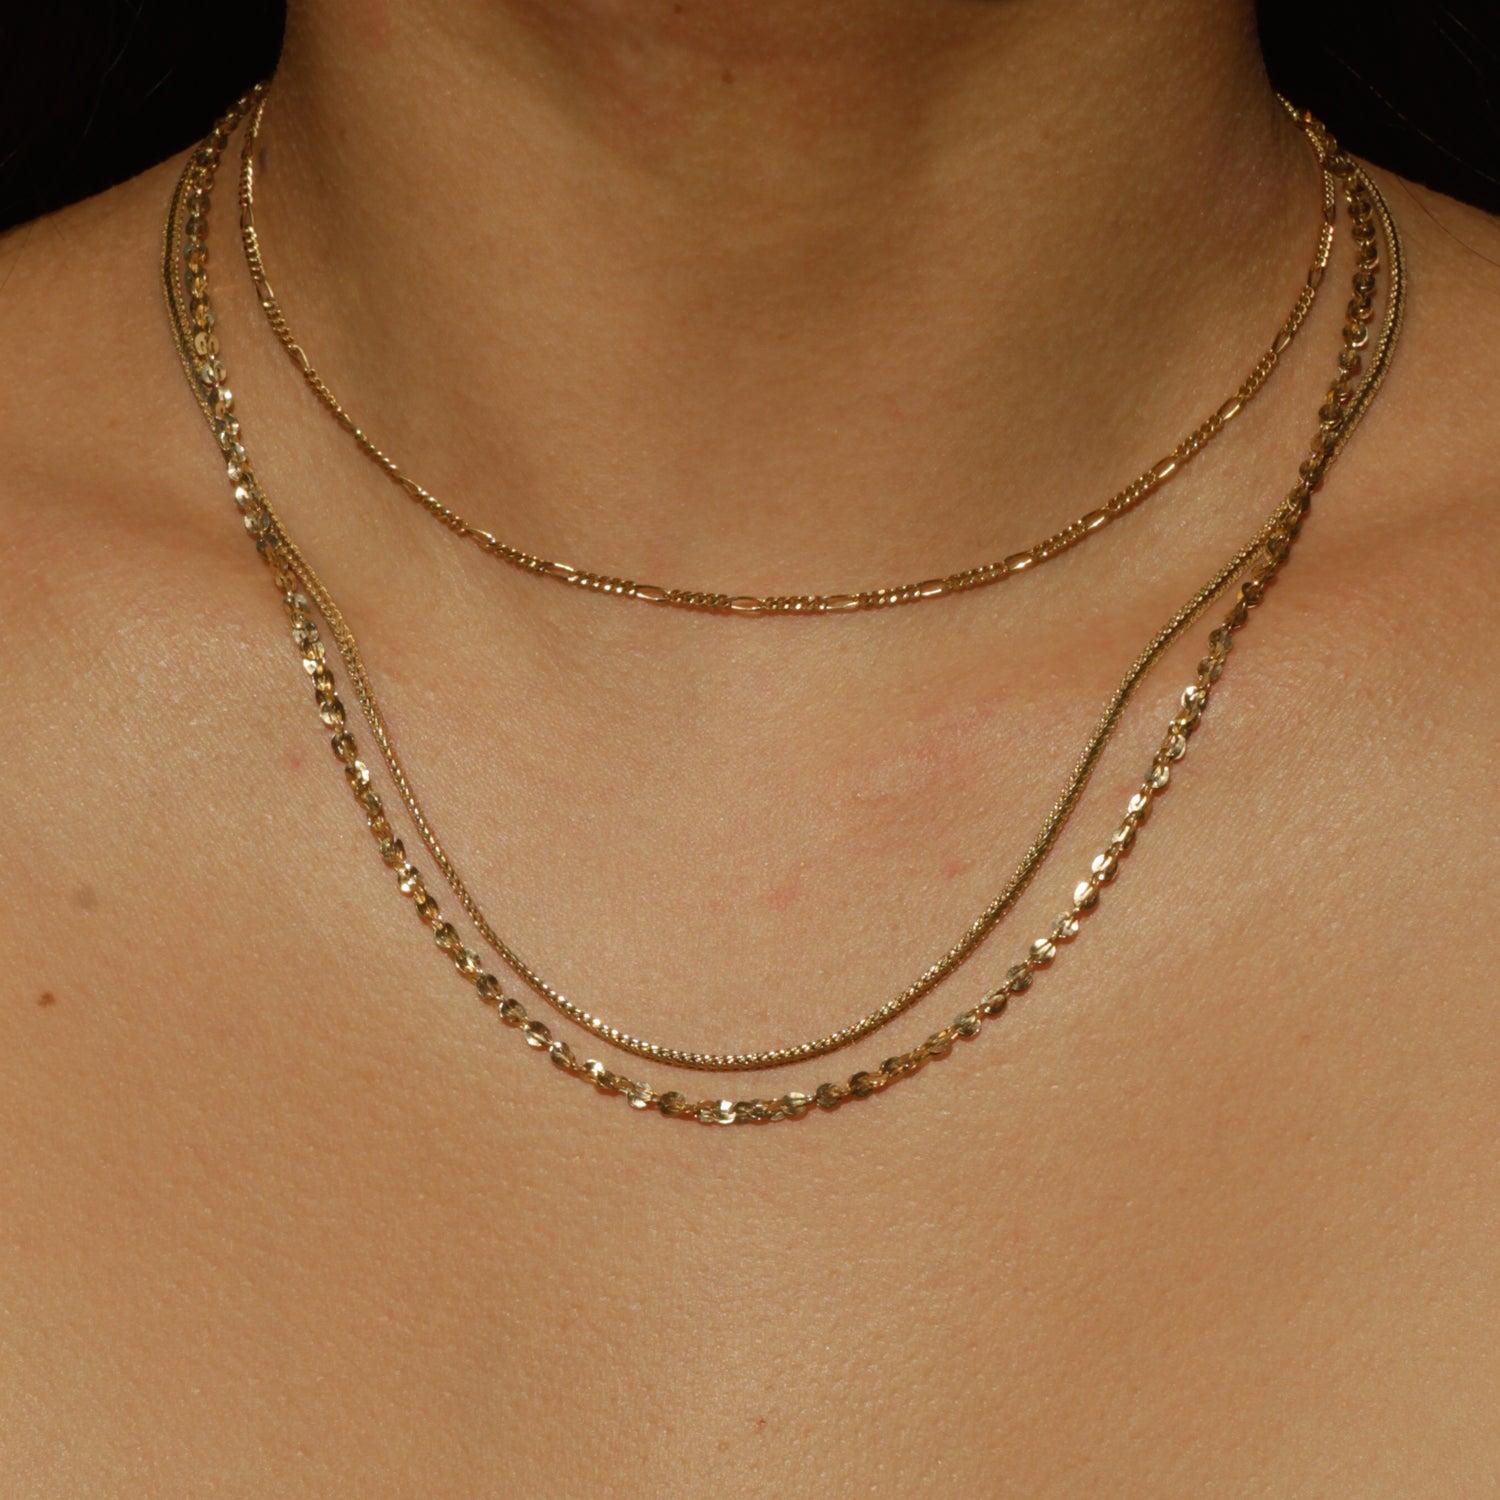 necklaces & chains